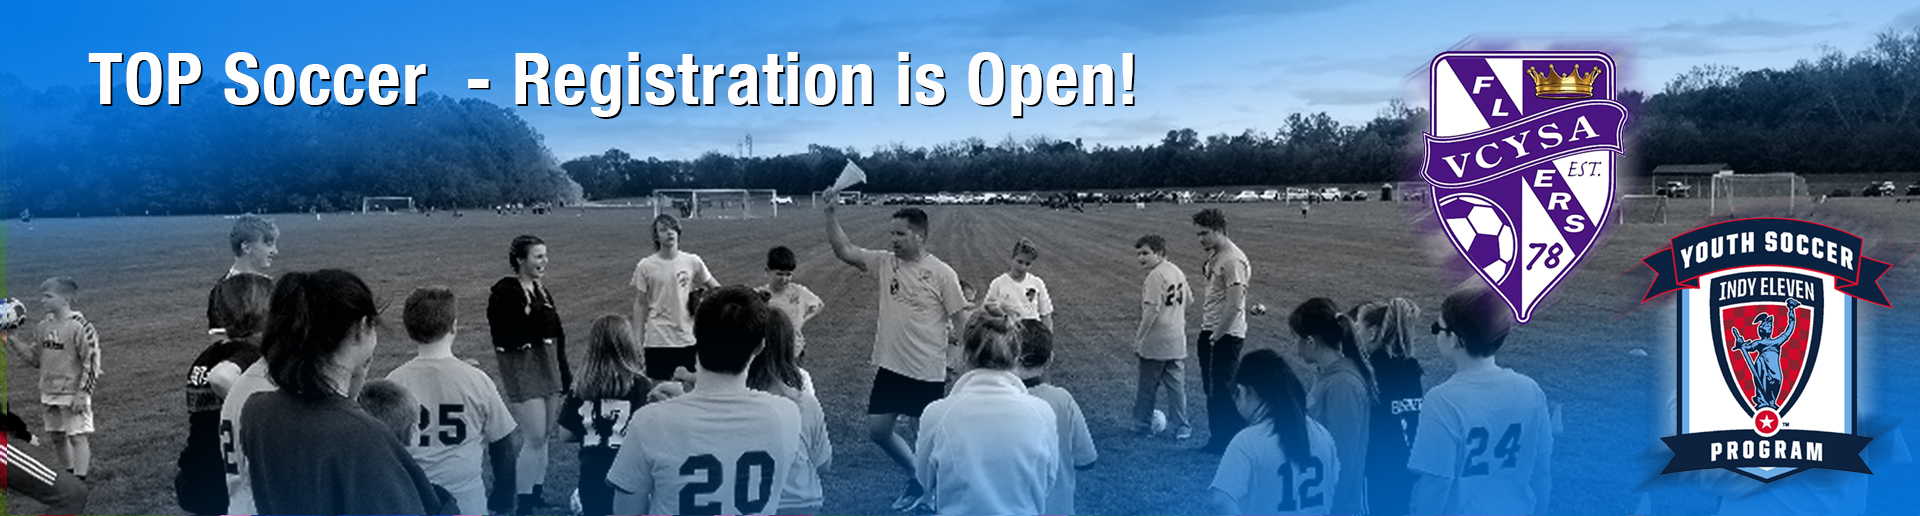 TOP Soccer Program - Registration is Open